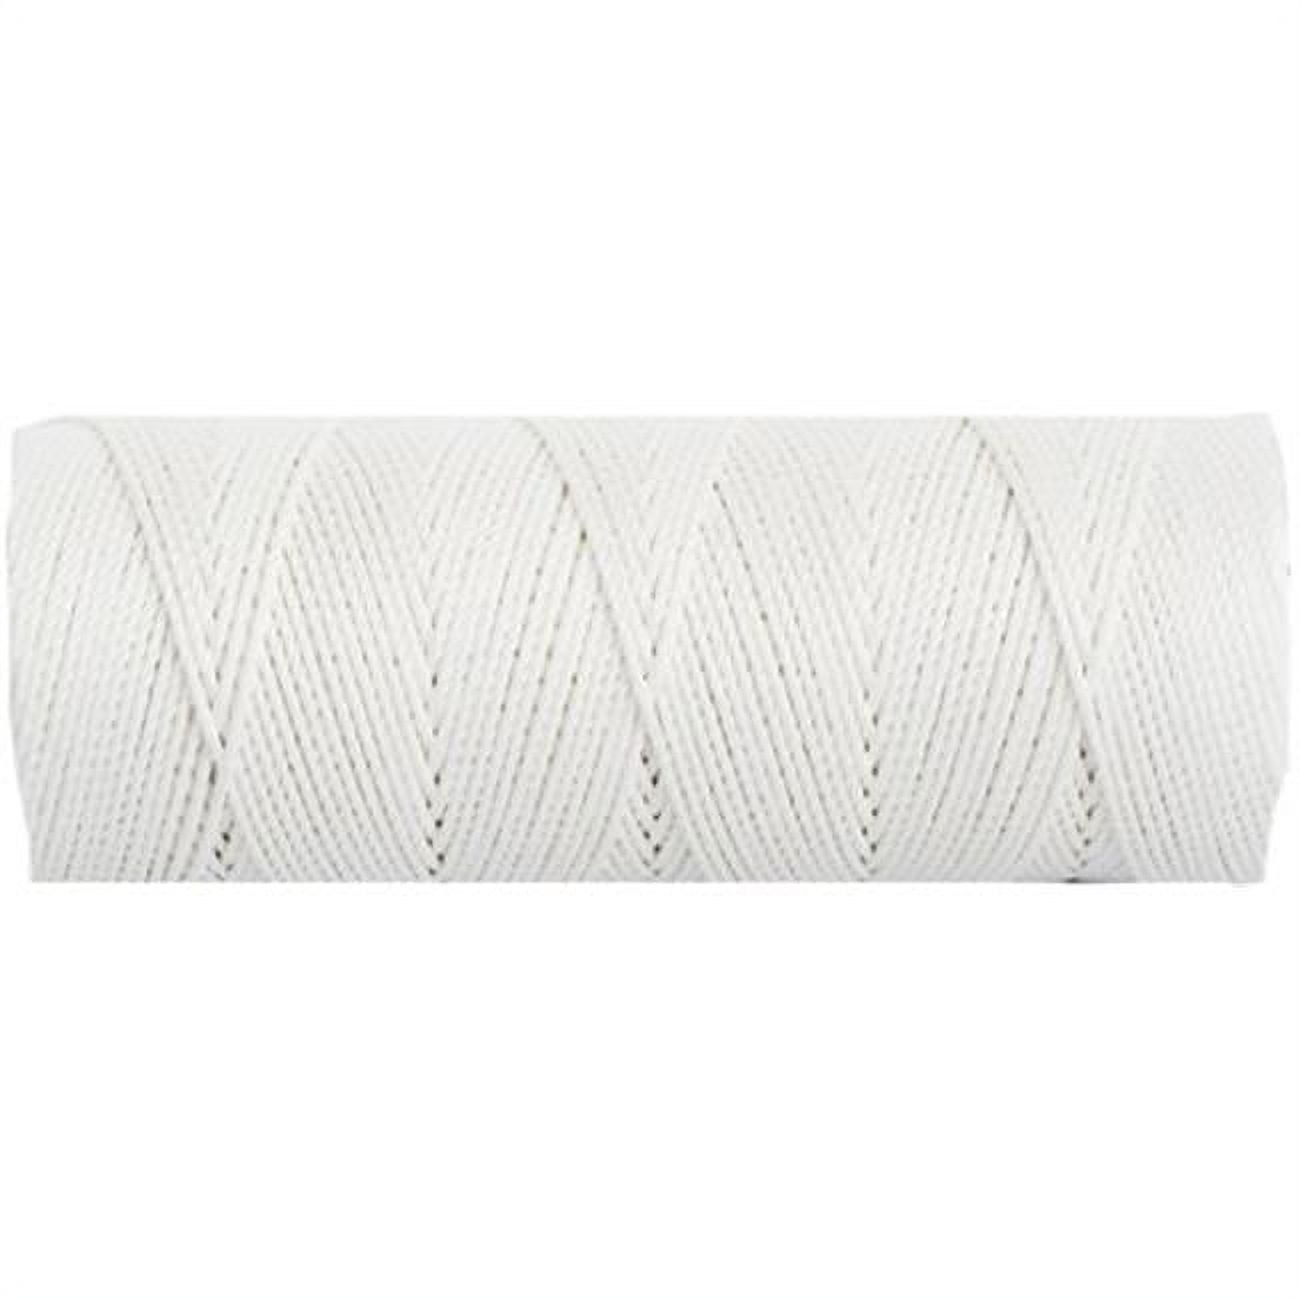 Tl101 No. 18 X 1050 Ft. Pure Nylon Seine Twisted Line Twine - White